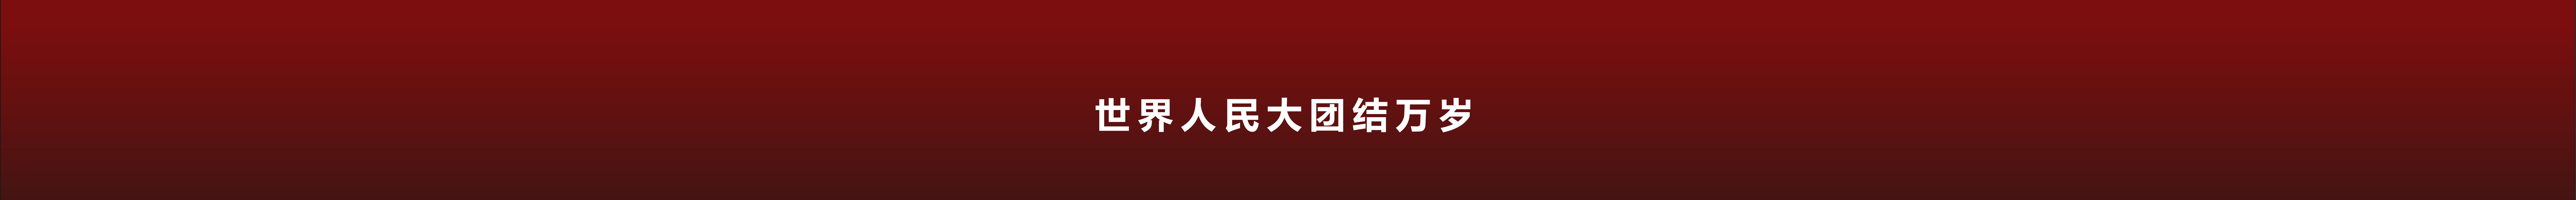 Yichao Wang's profile banner